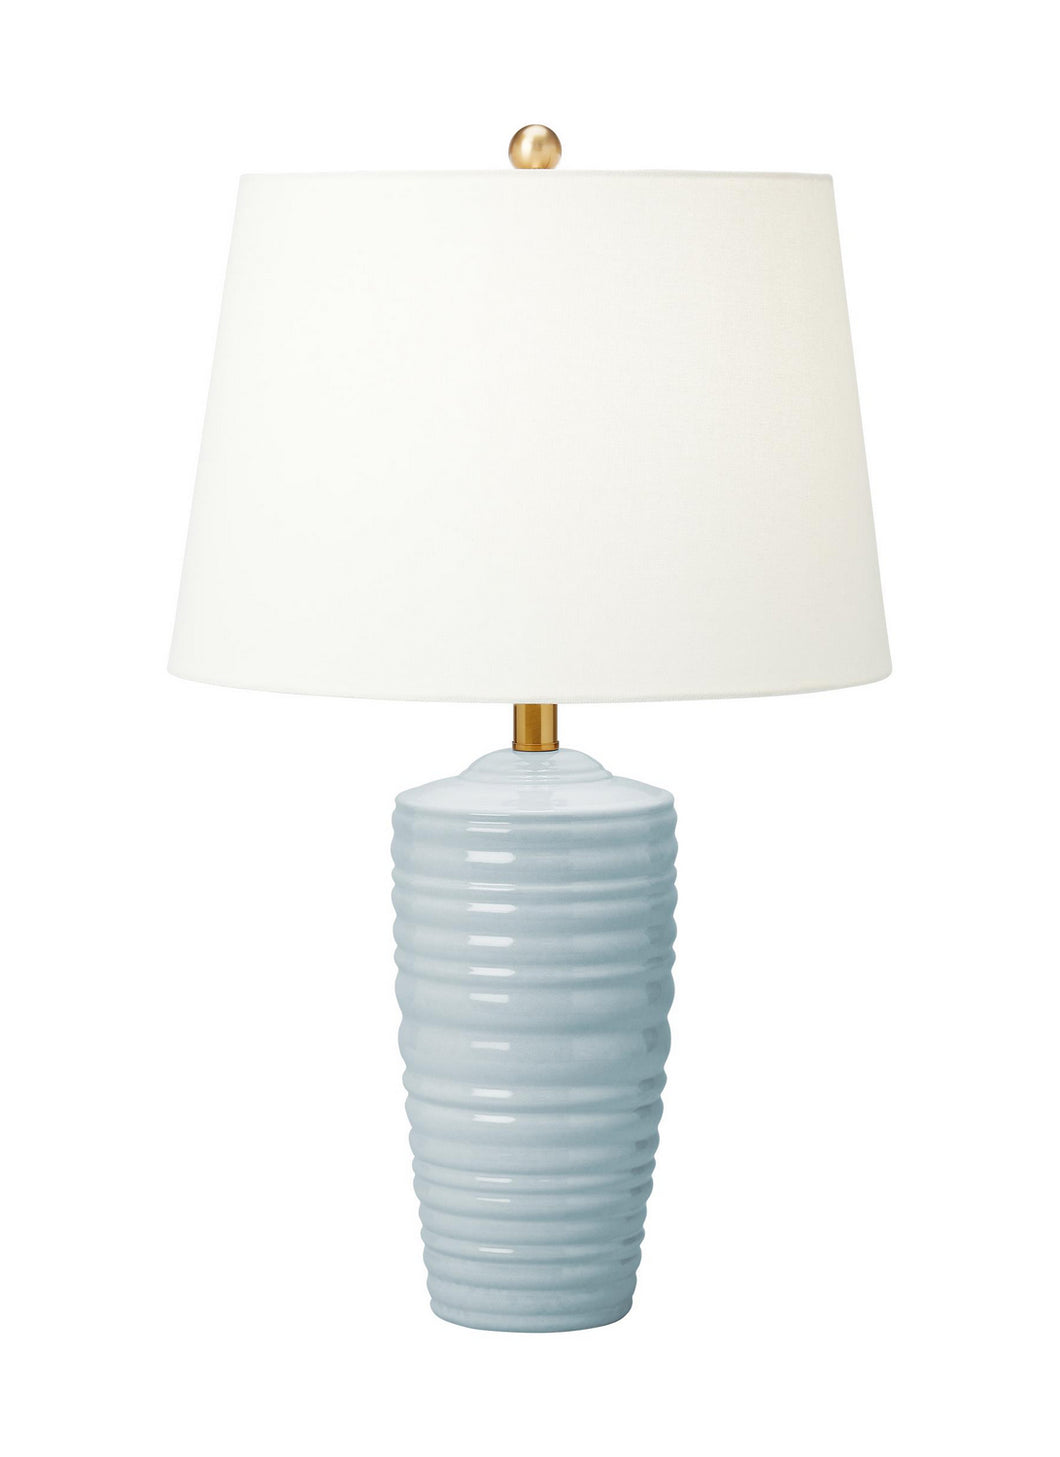 Generation Lighting - CT1201FRA1 - One Light Table Lamp - Waveland